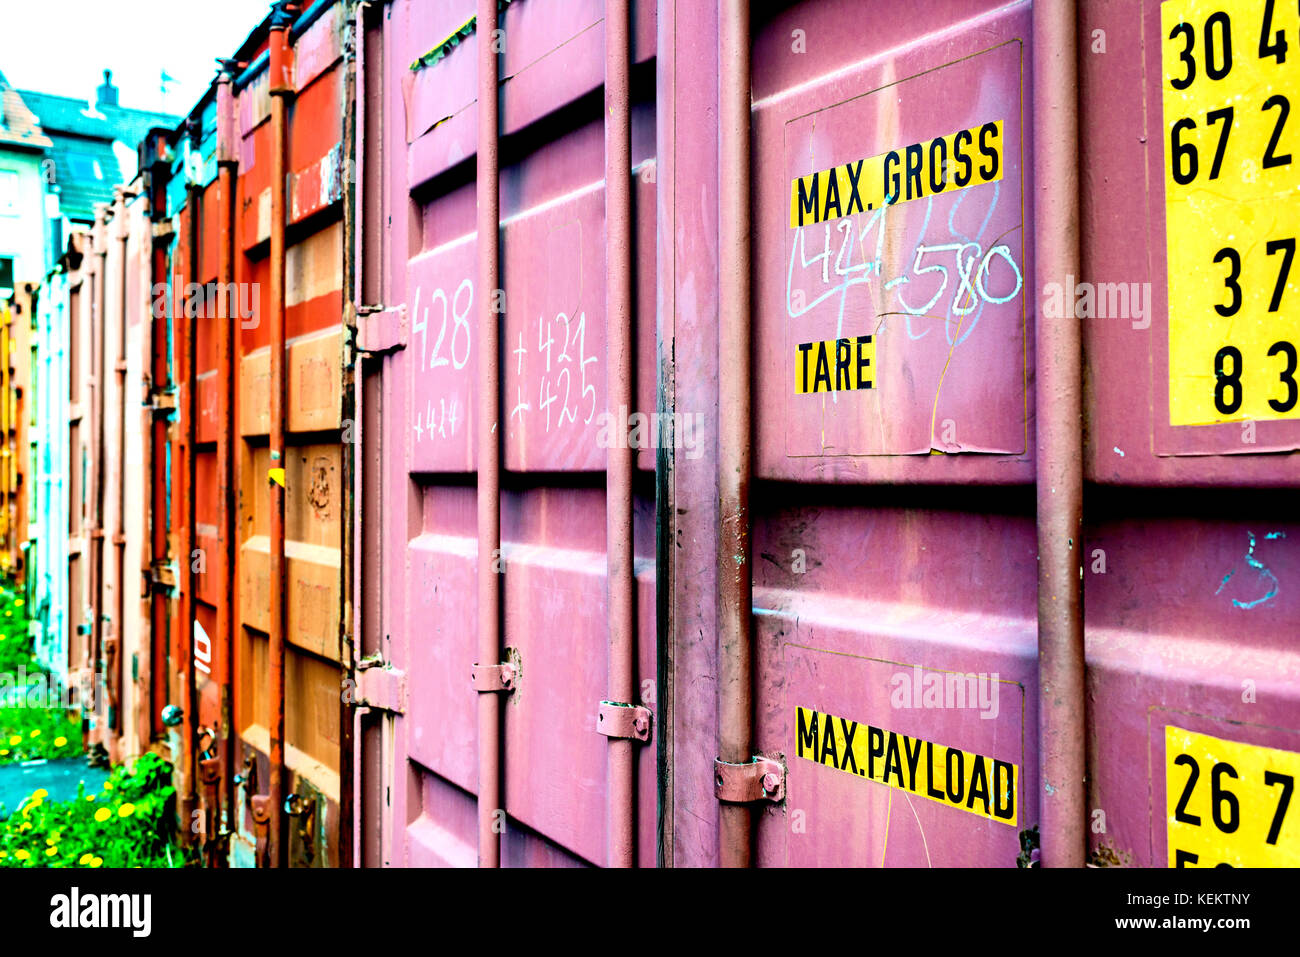 Container Stock Photo